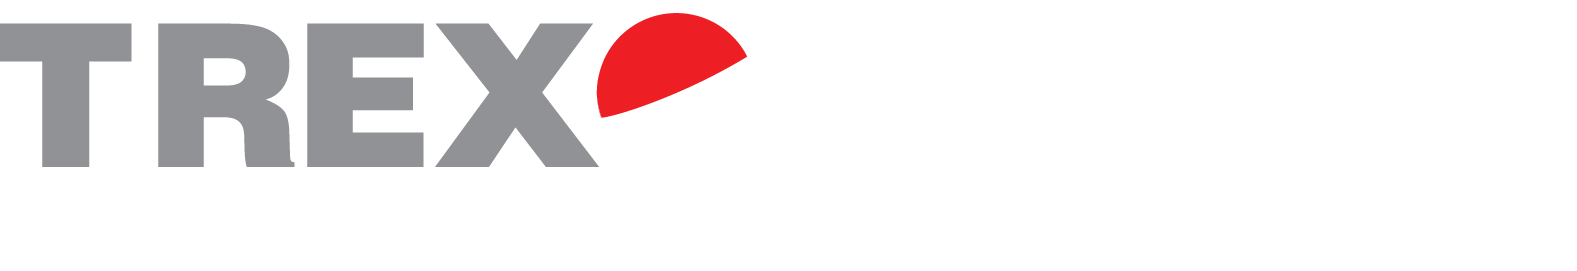 av logo